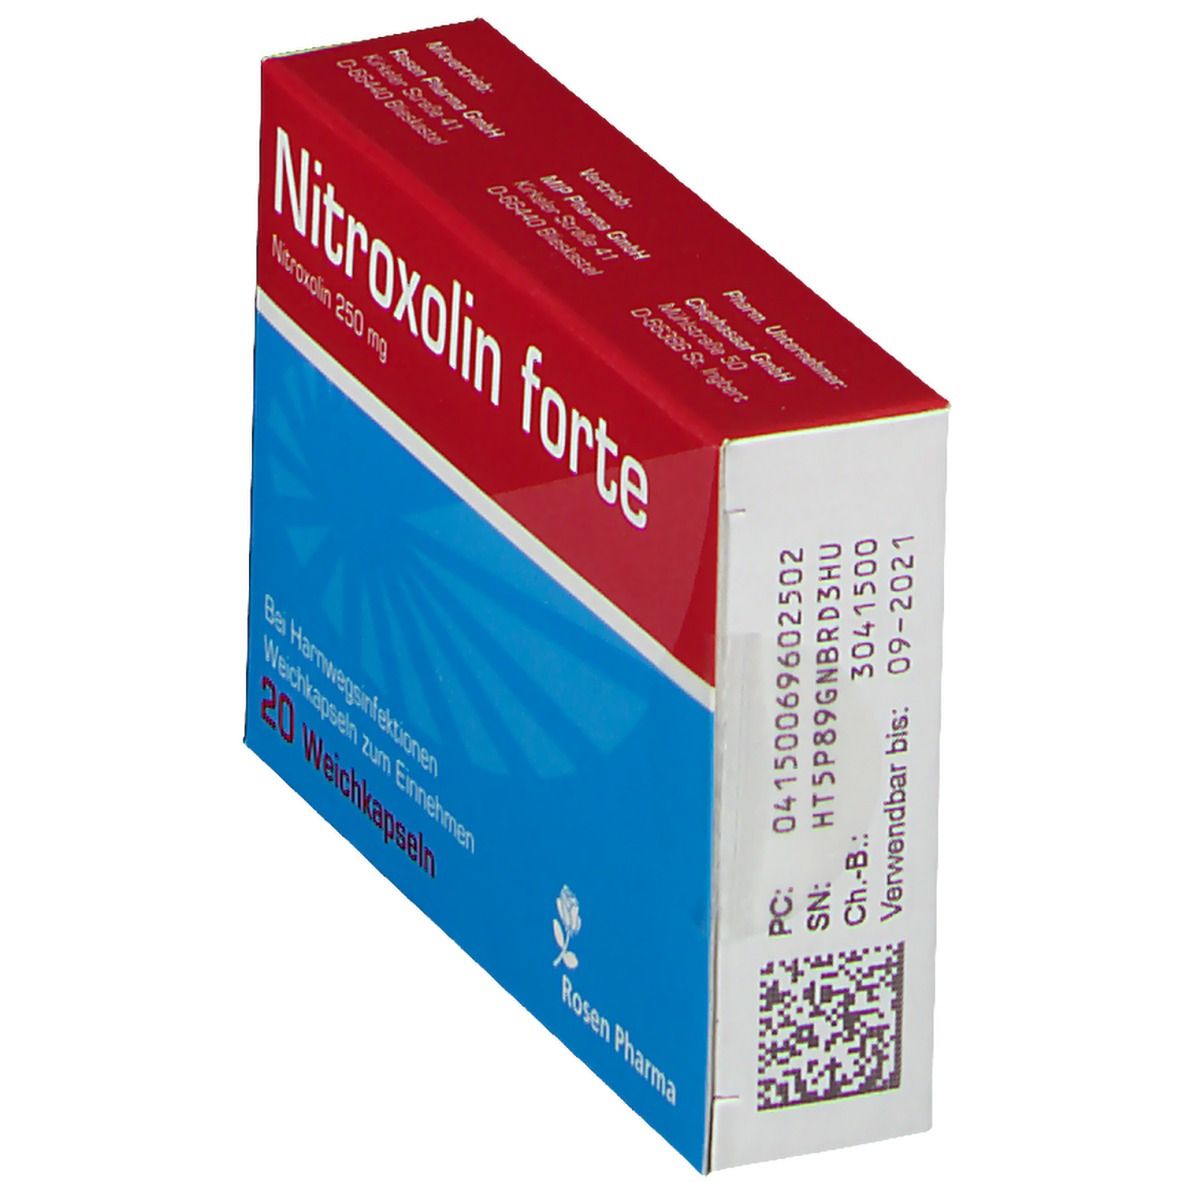 Nitroxolin forte 250 mg